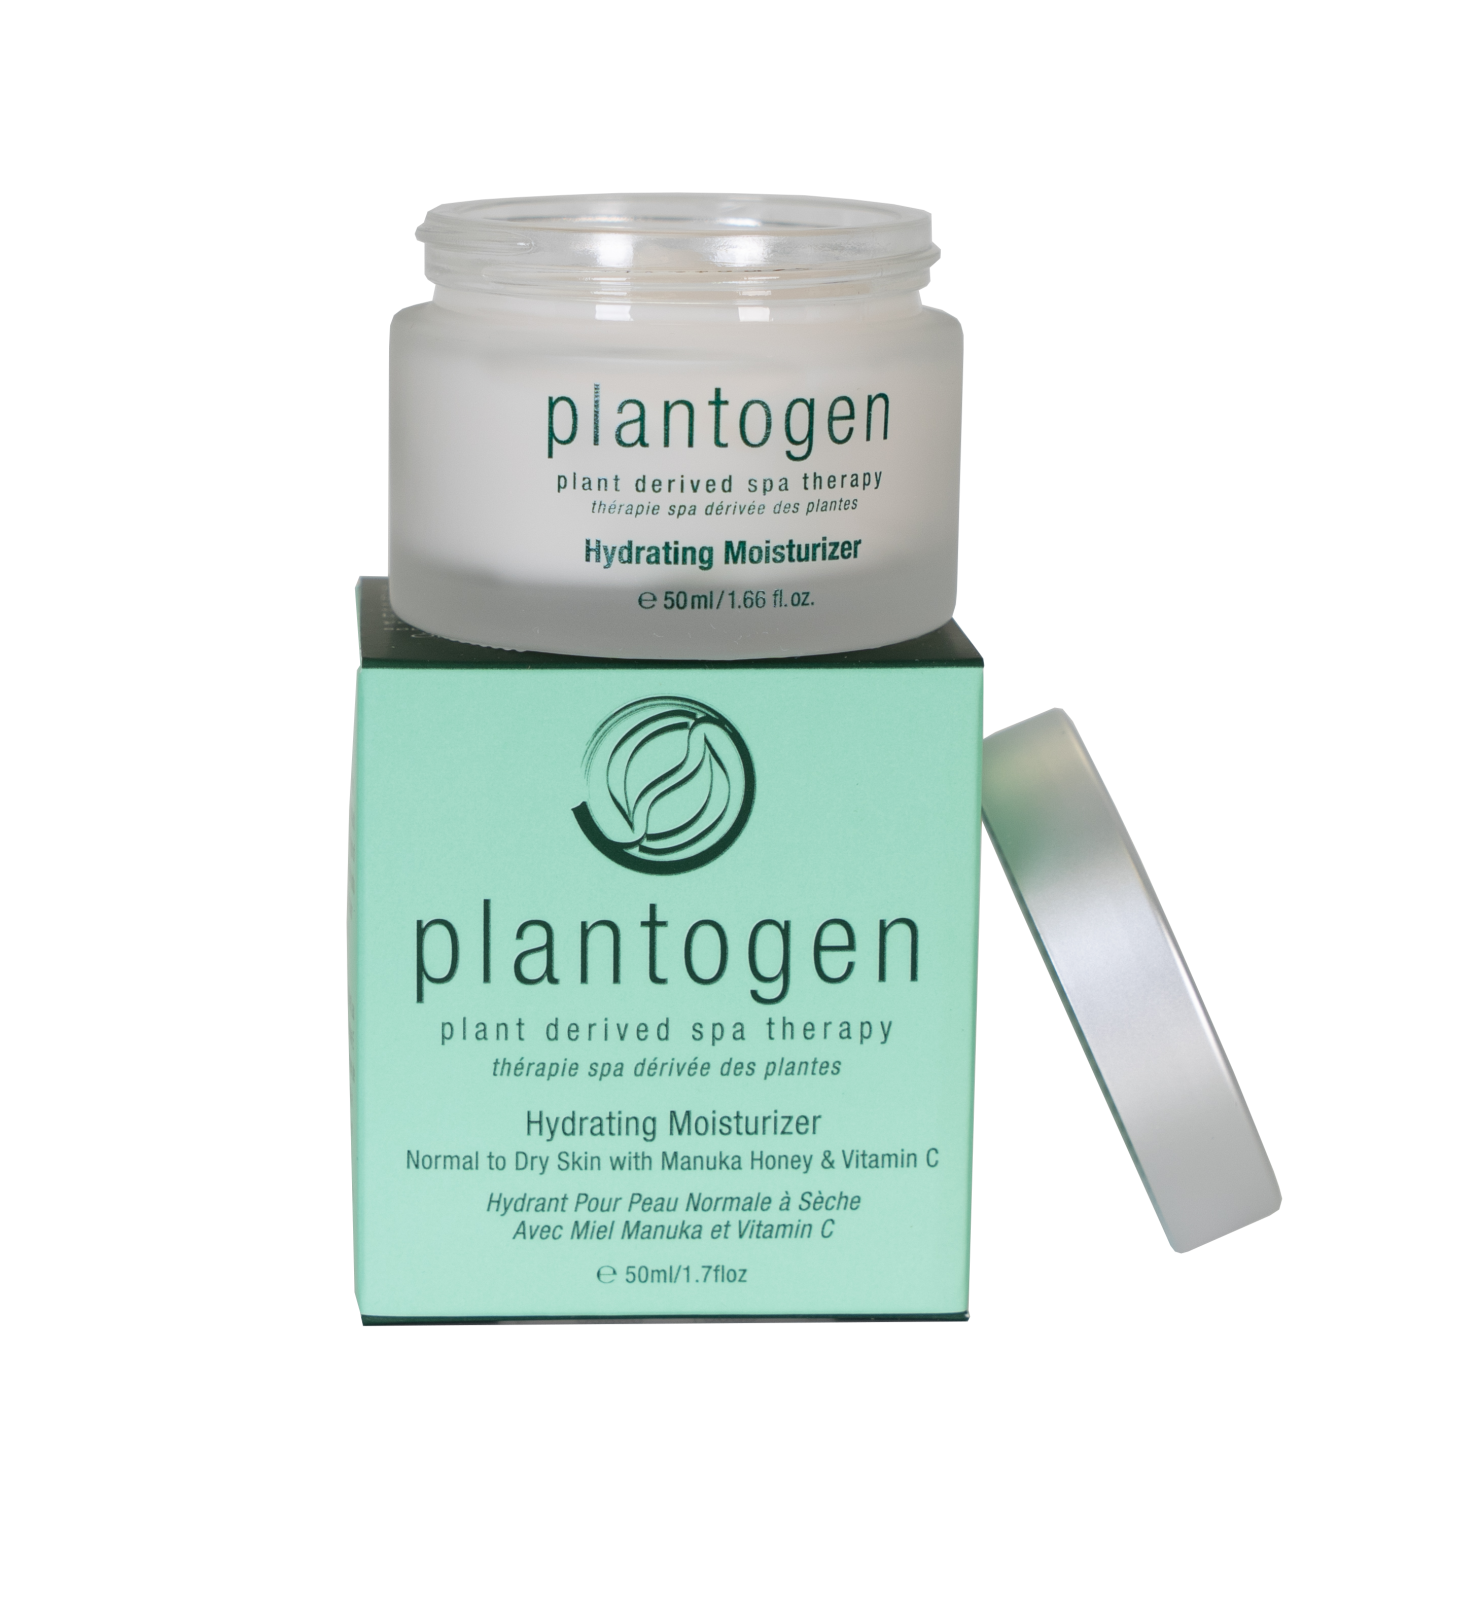 Plantogen® Hydrating Moisturizer for Plantogen